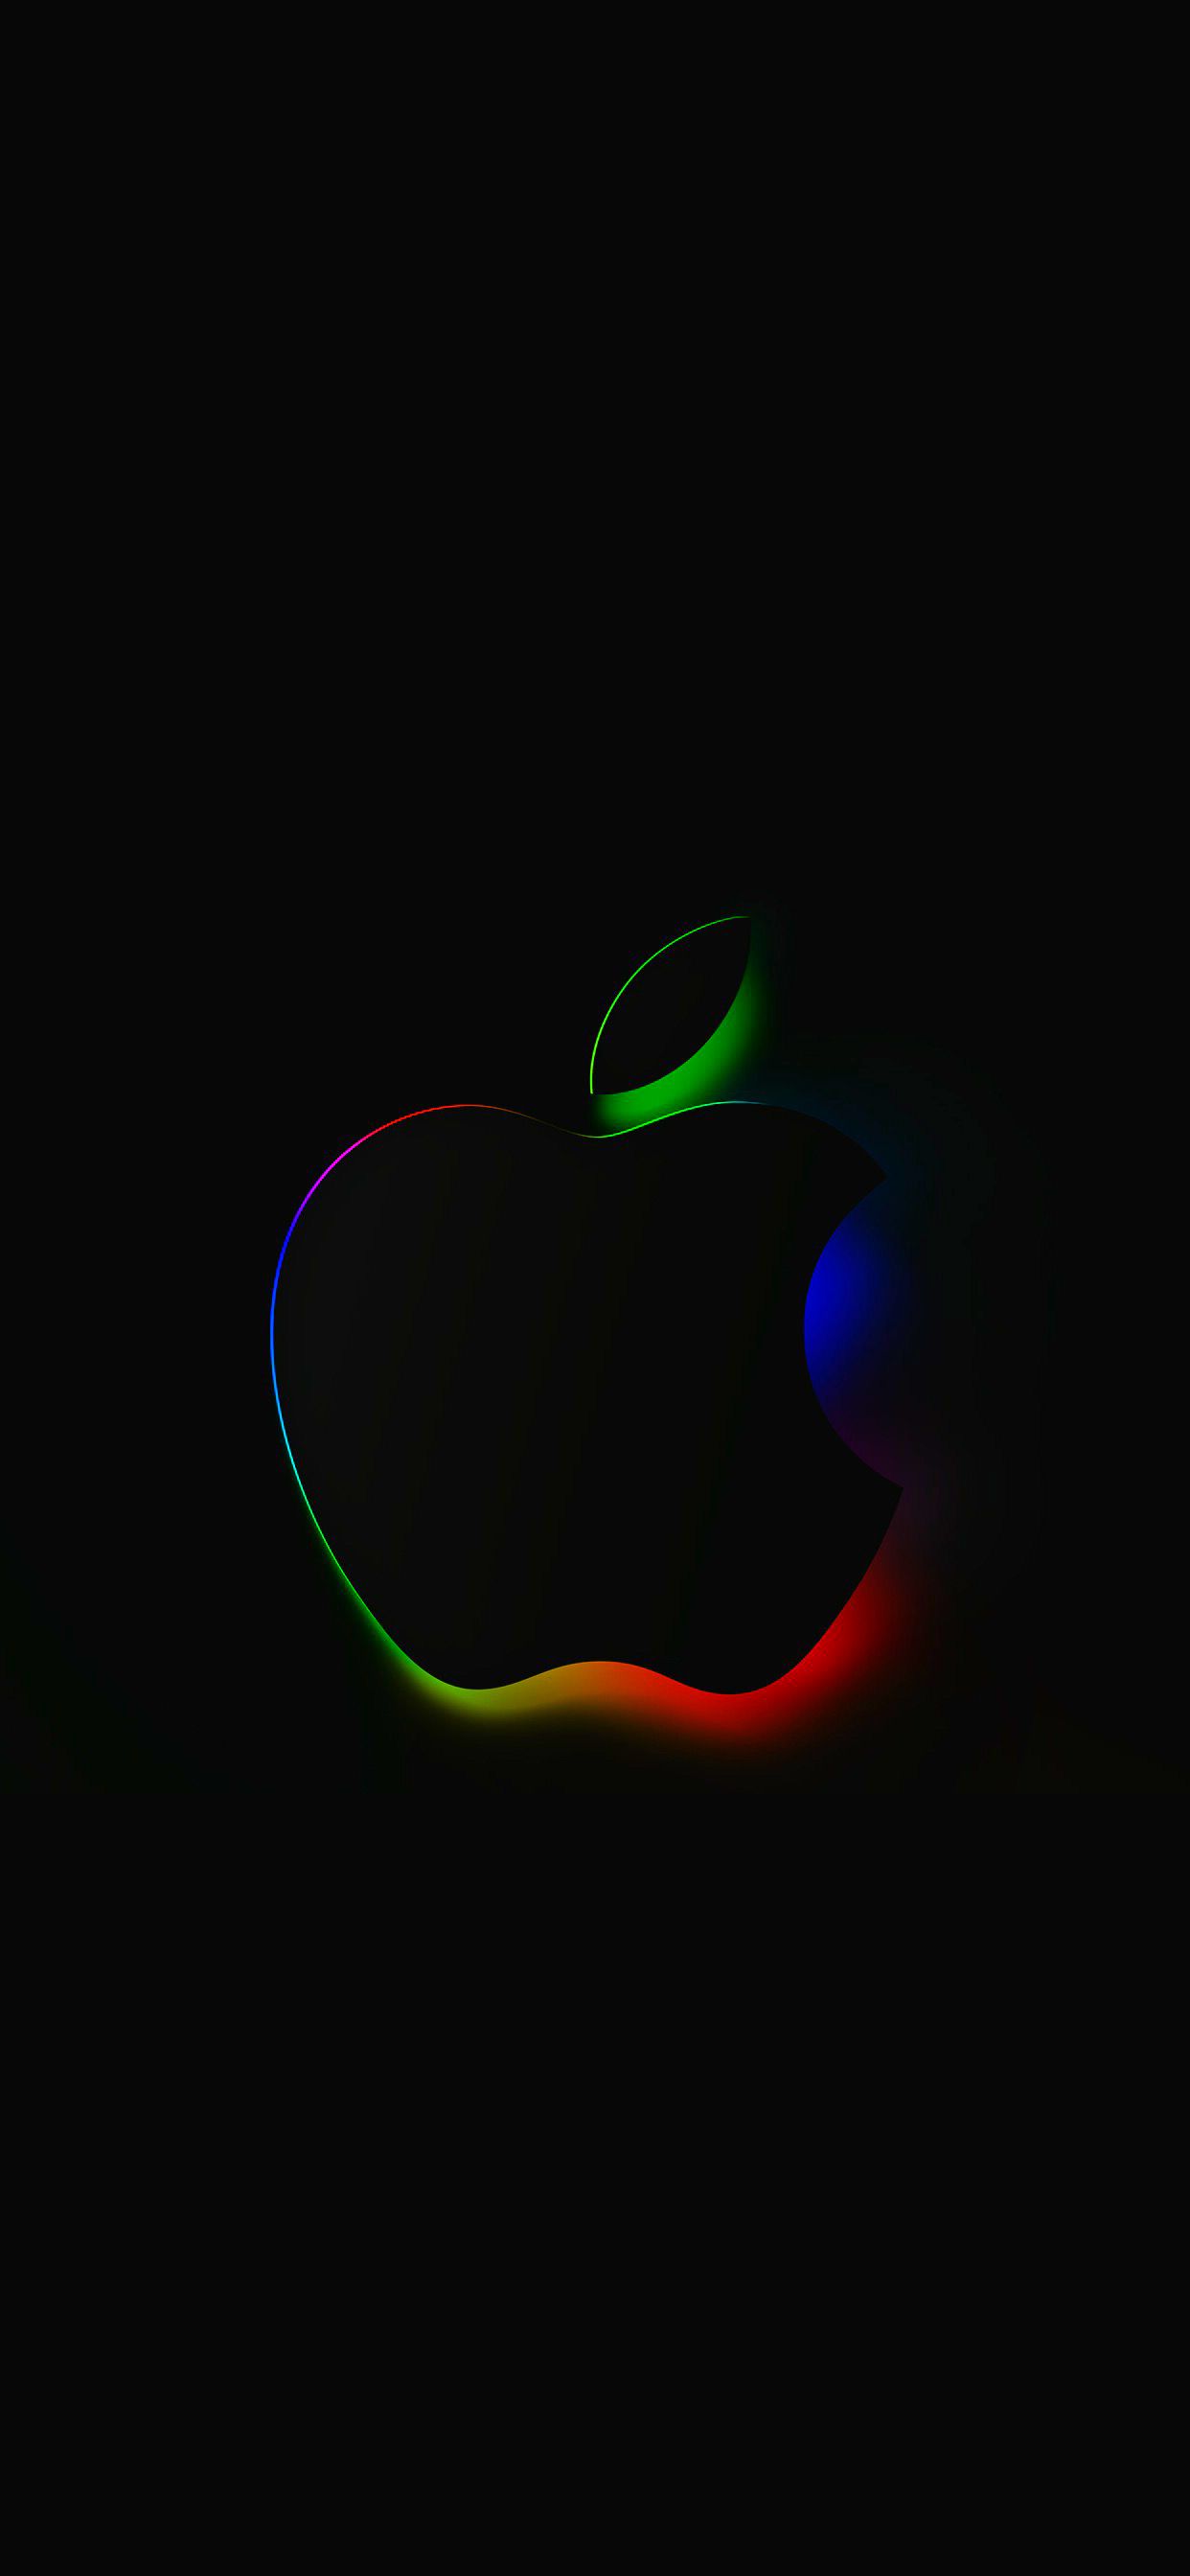 Applelogo appleiphone appleipad ios iphonewallpaper apple logo wallpaper iphone apple wallpaper iphone apple wallpaper